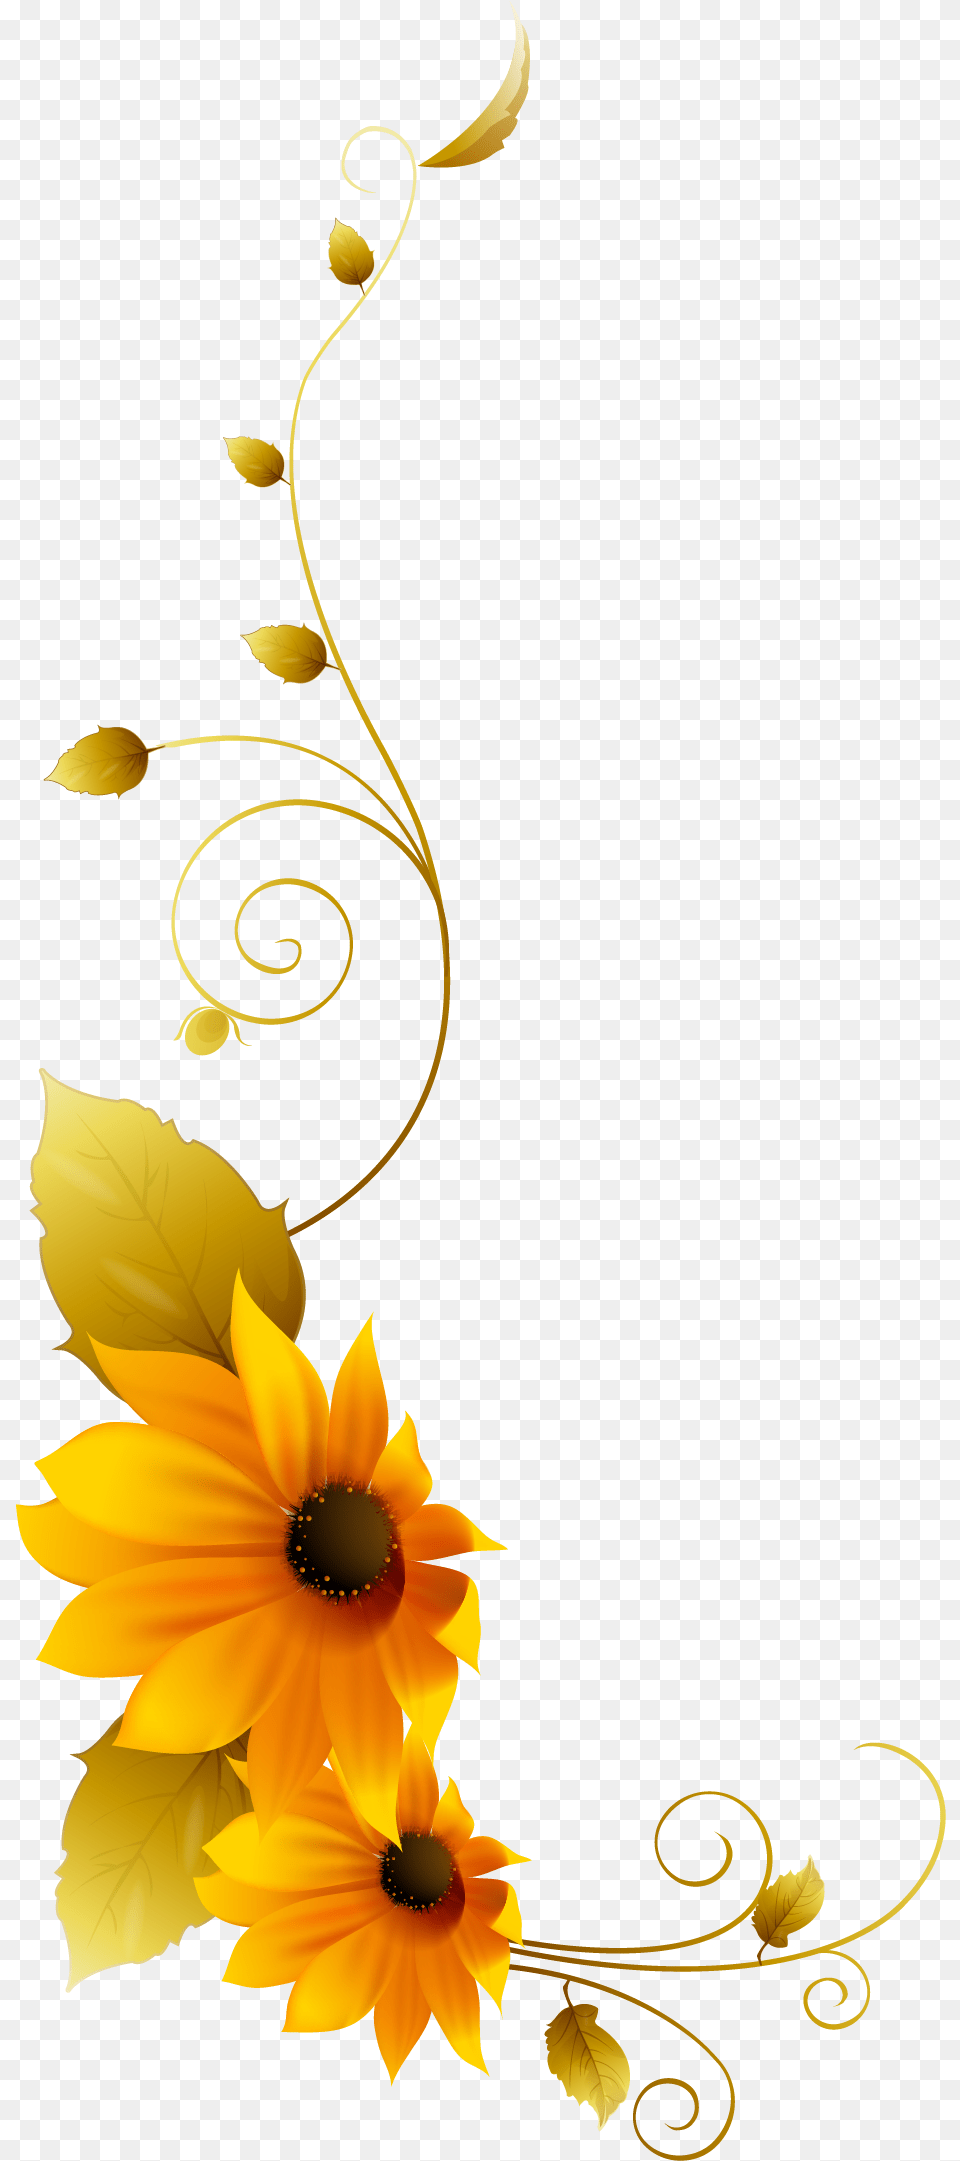 Sunflowers Vine Sunflower Transparent Cartoon Yellow Flower Vine Clipart, Art, Floral Design, Graphics, Pattern Png